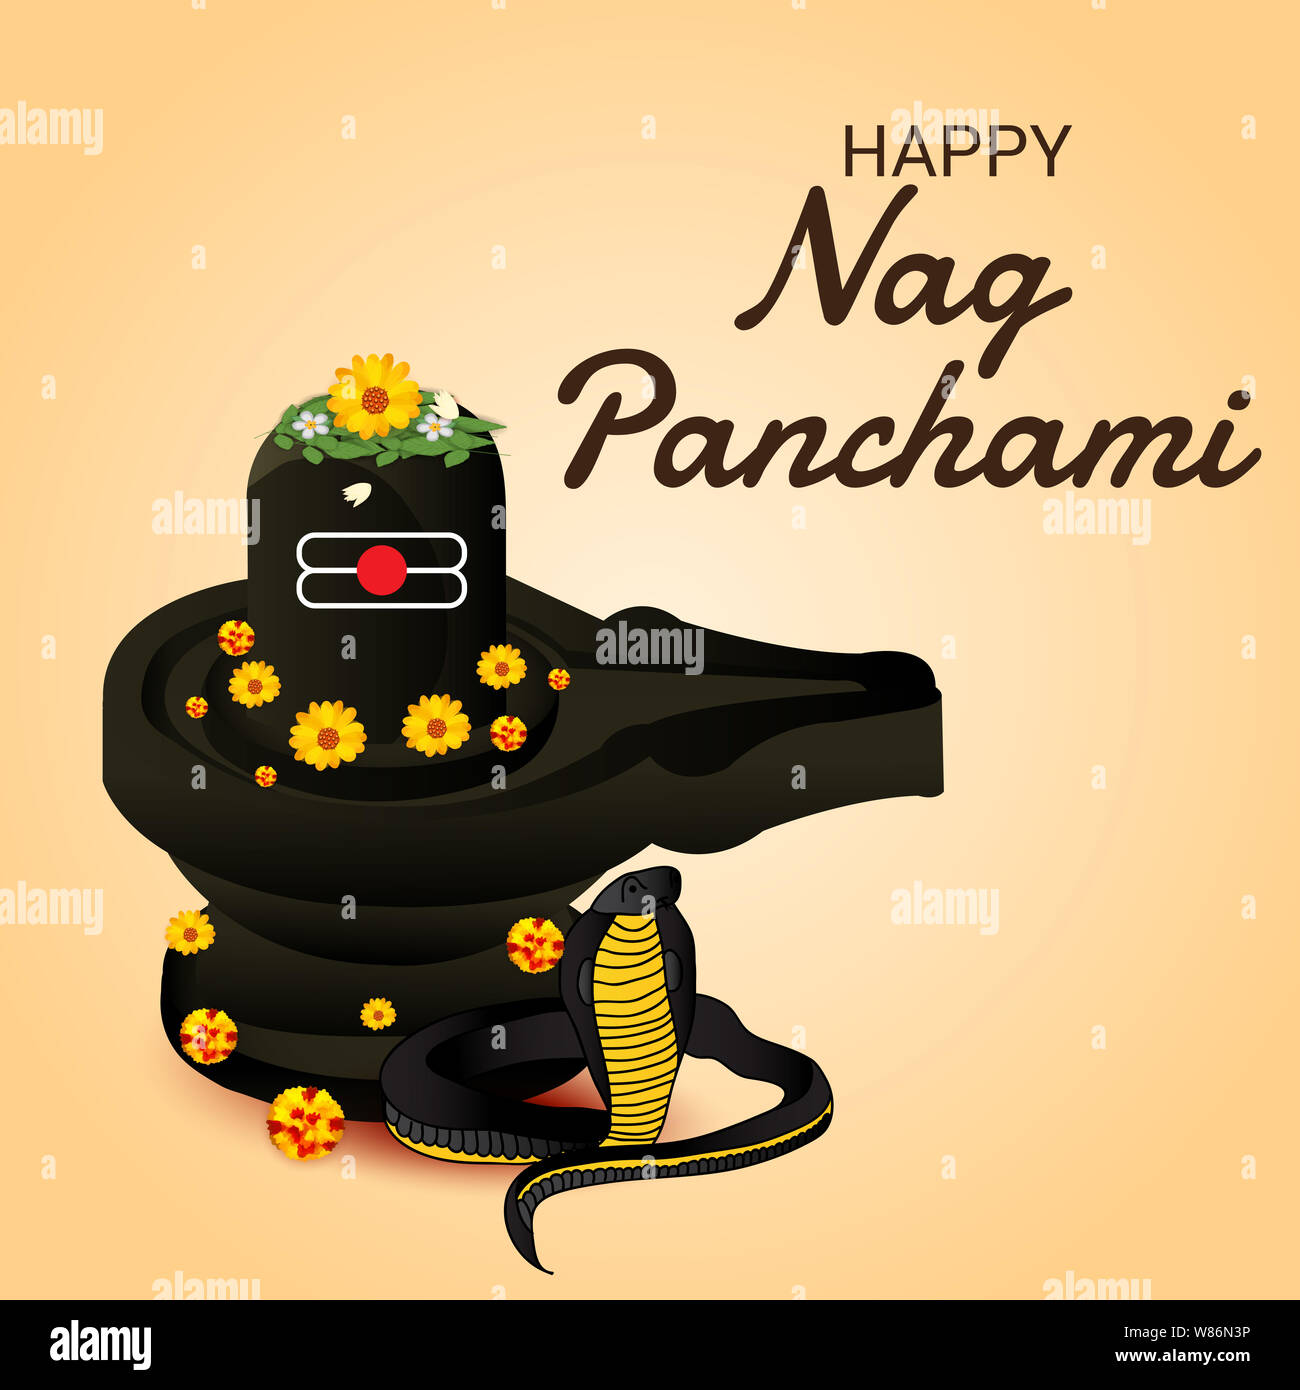 Vector illustration of a Banner for Nag Panchami with Hindi Text ...